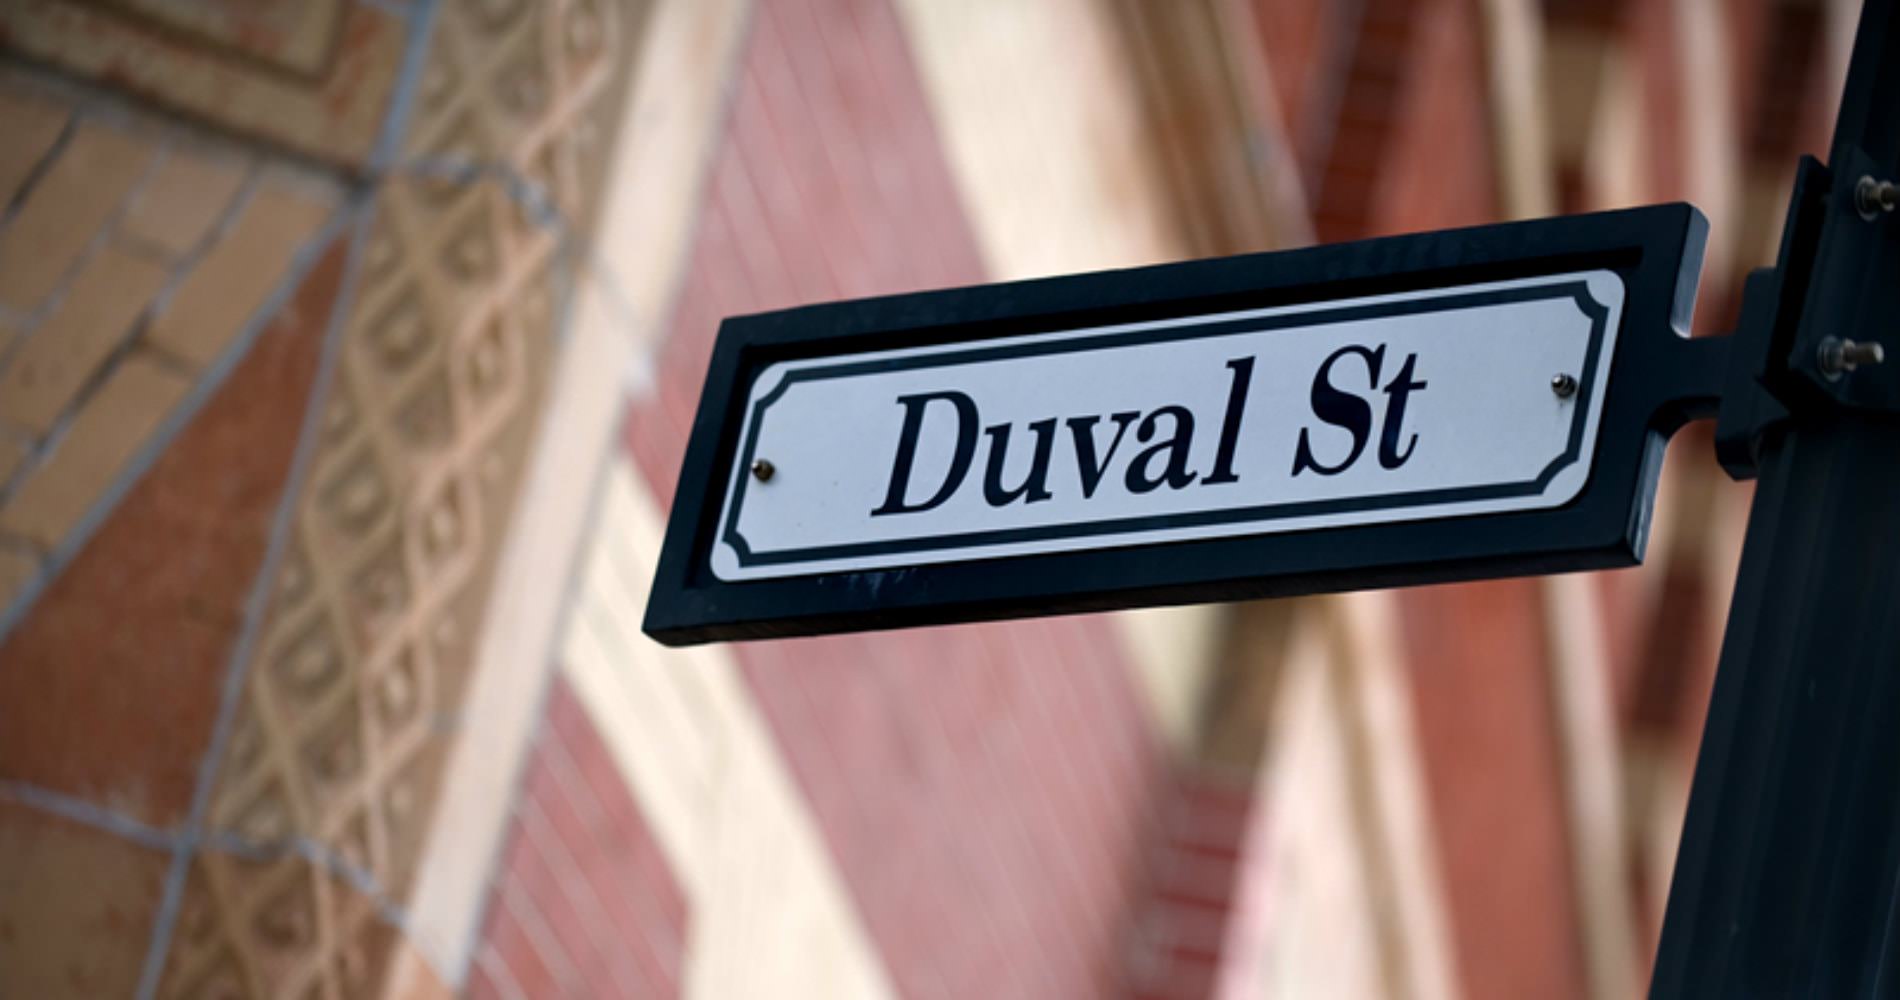 Black and white rectangular street sign Duval street next to brick building